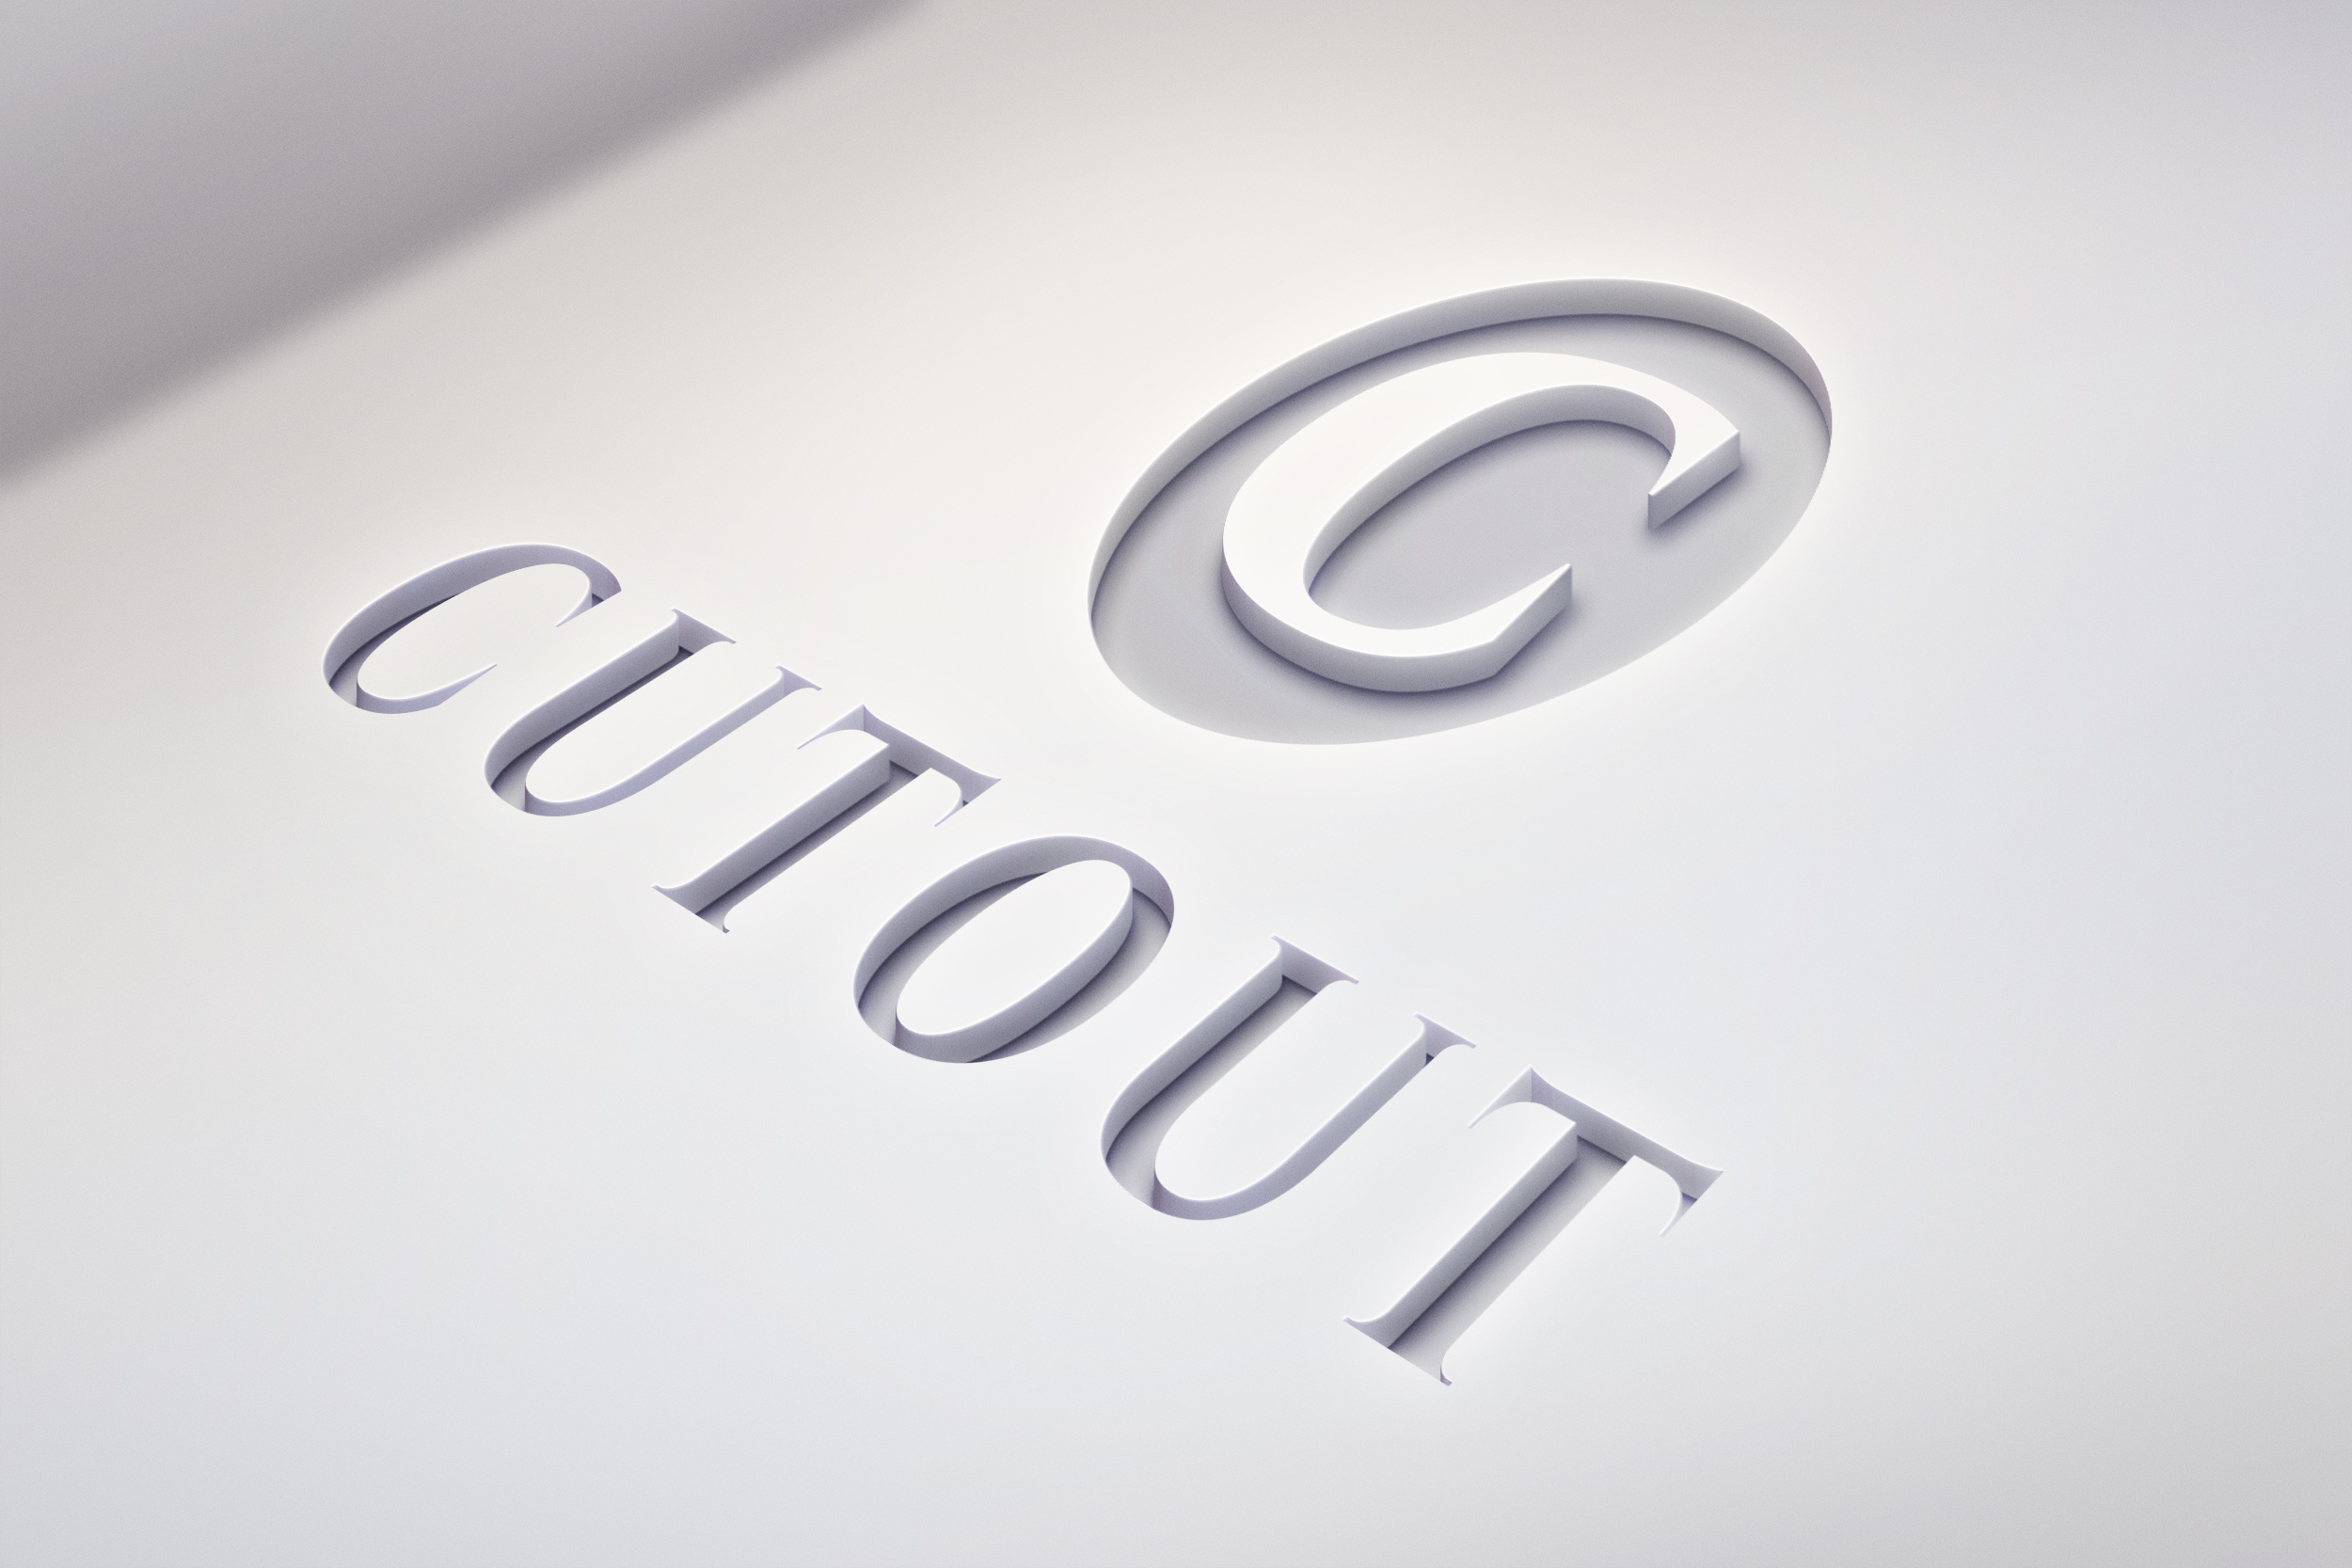 Cutout Clean Logo Mockup Free Download